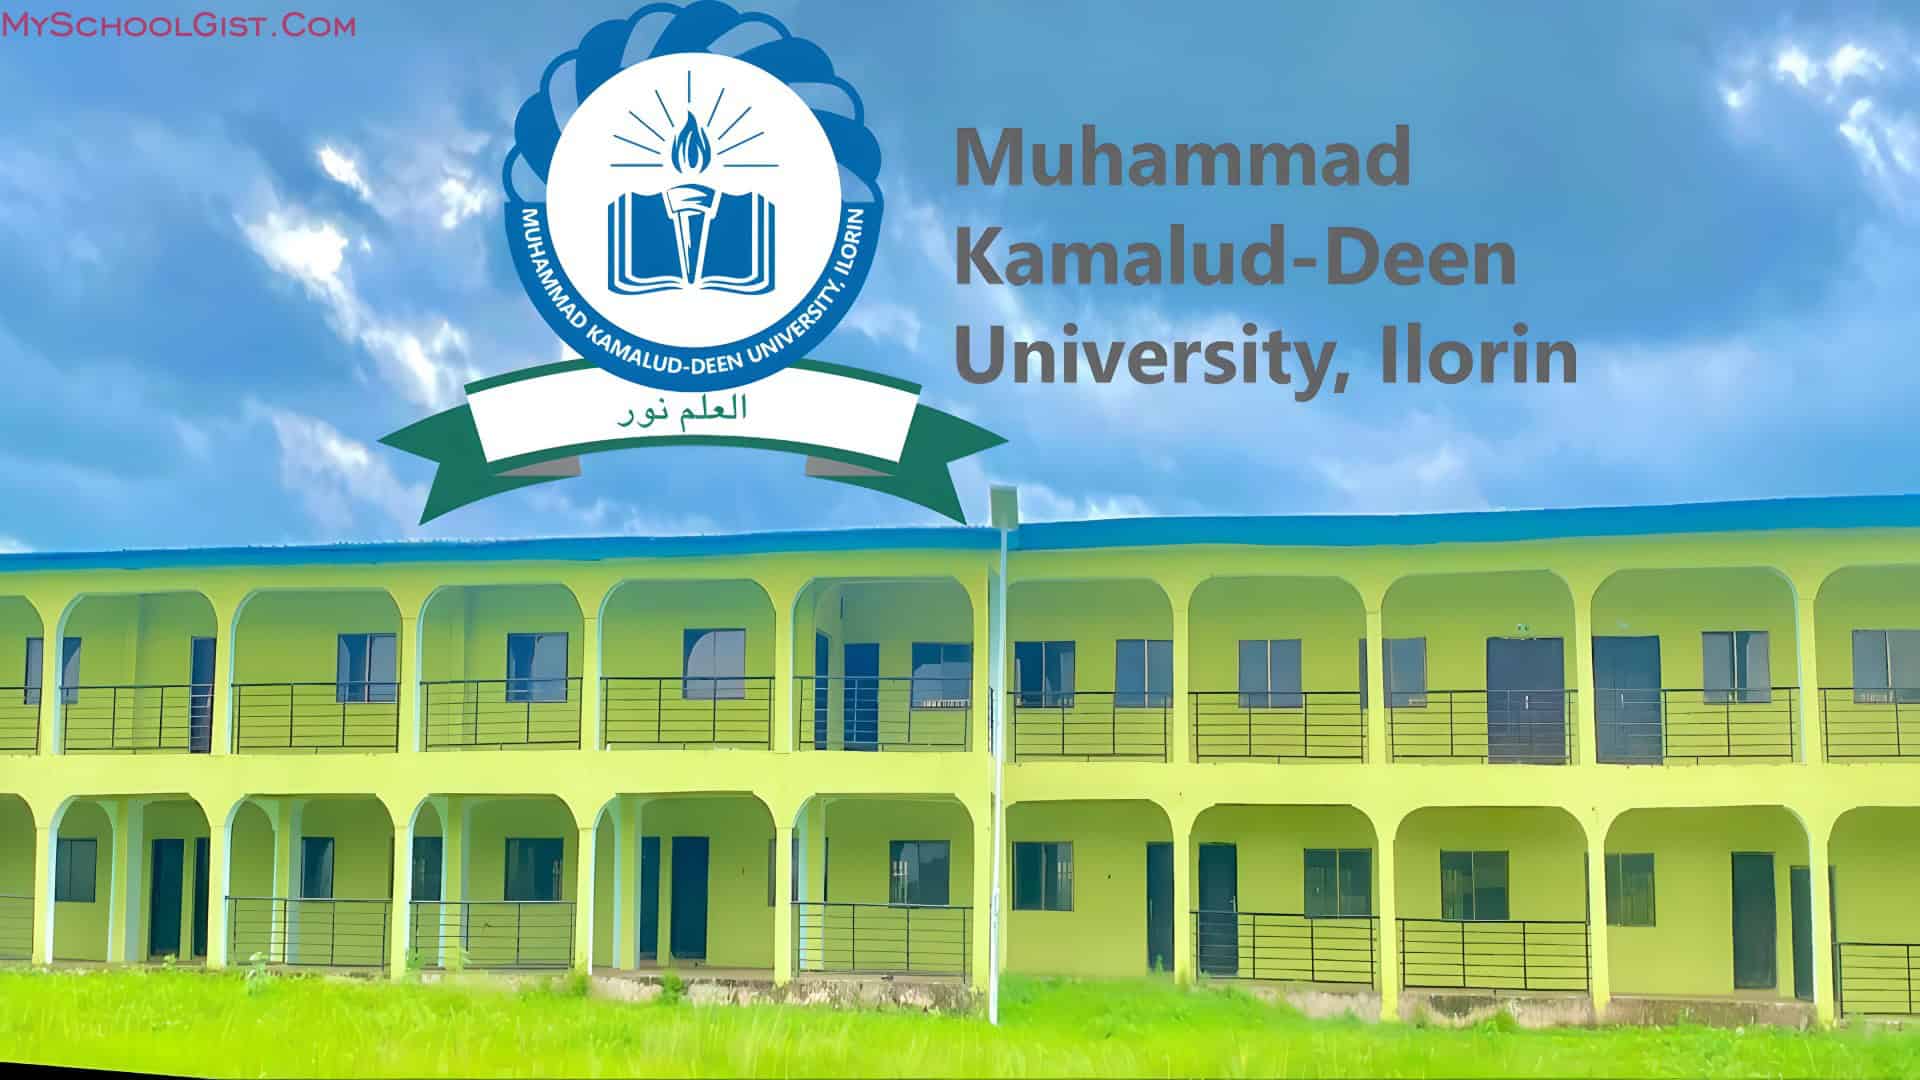 Muhammad Kamalud-deen University (MKU) School Fees